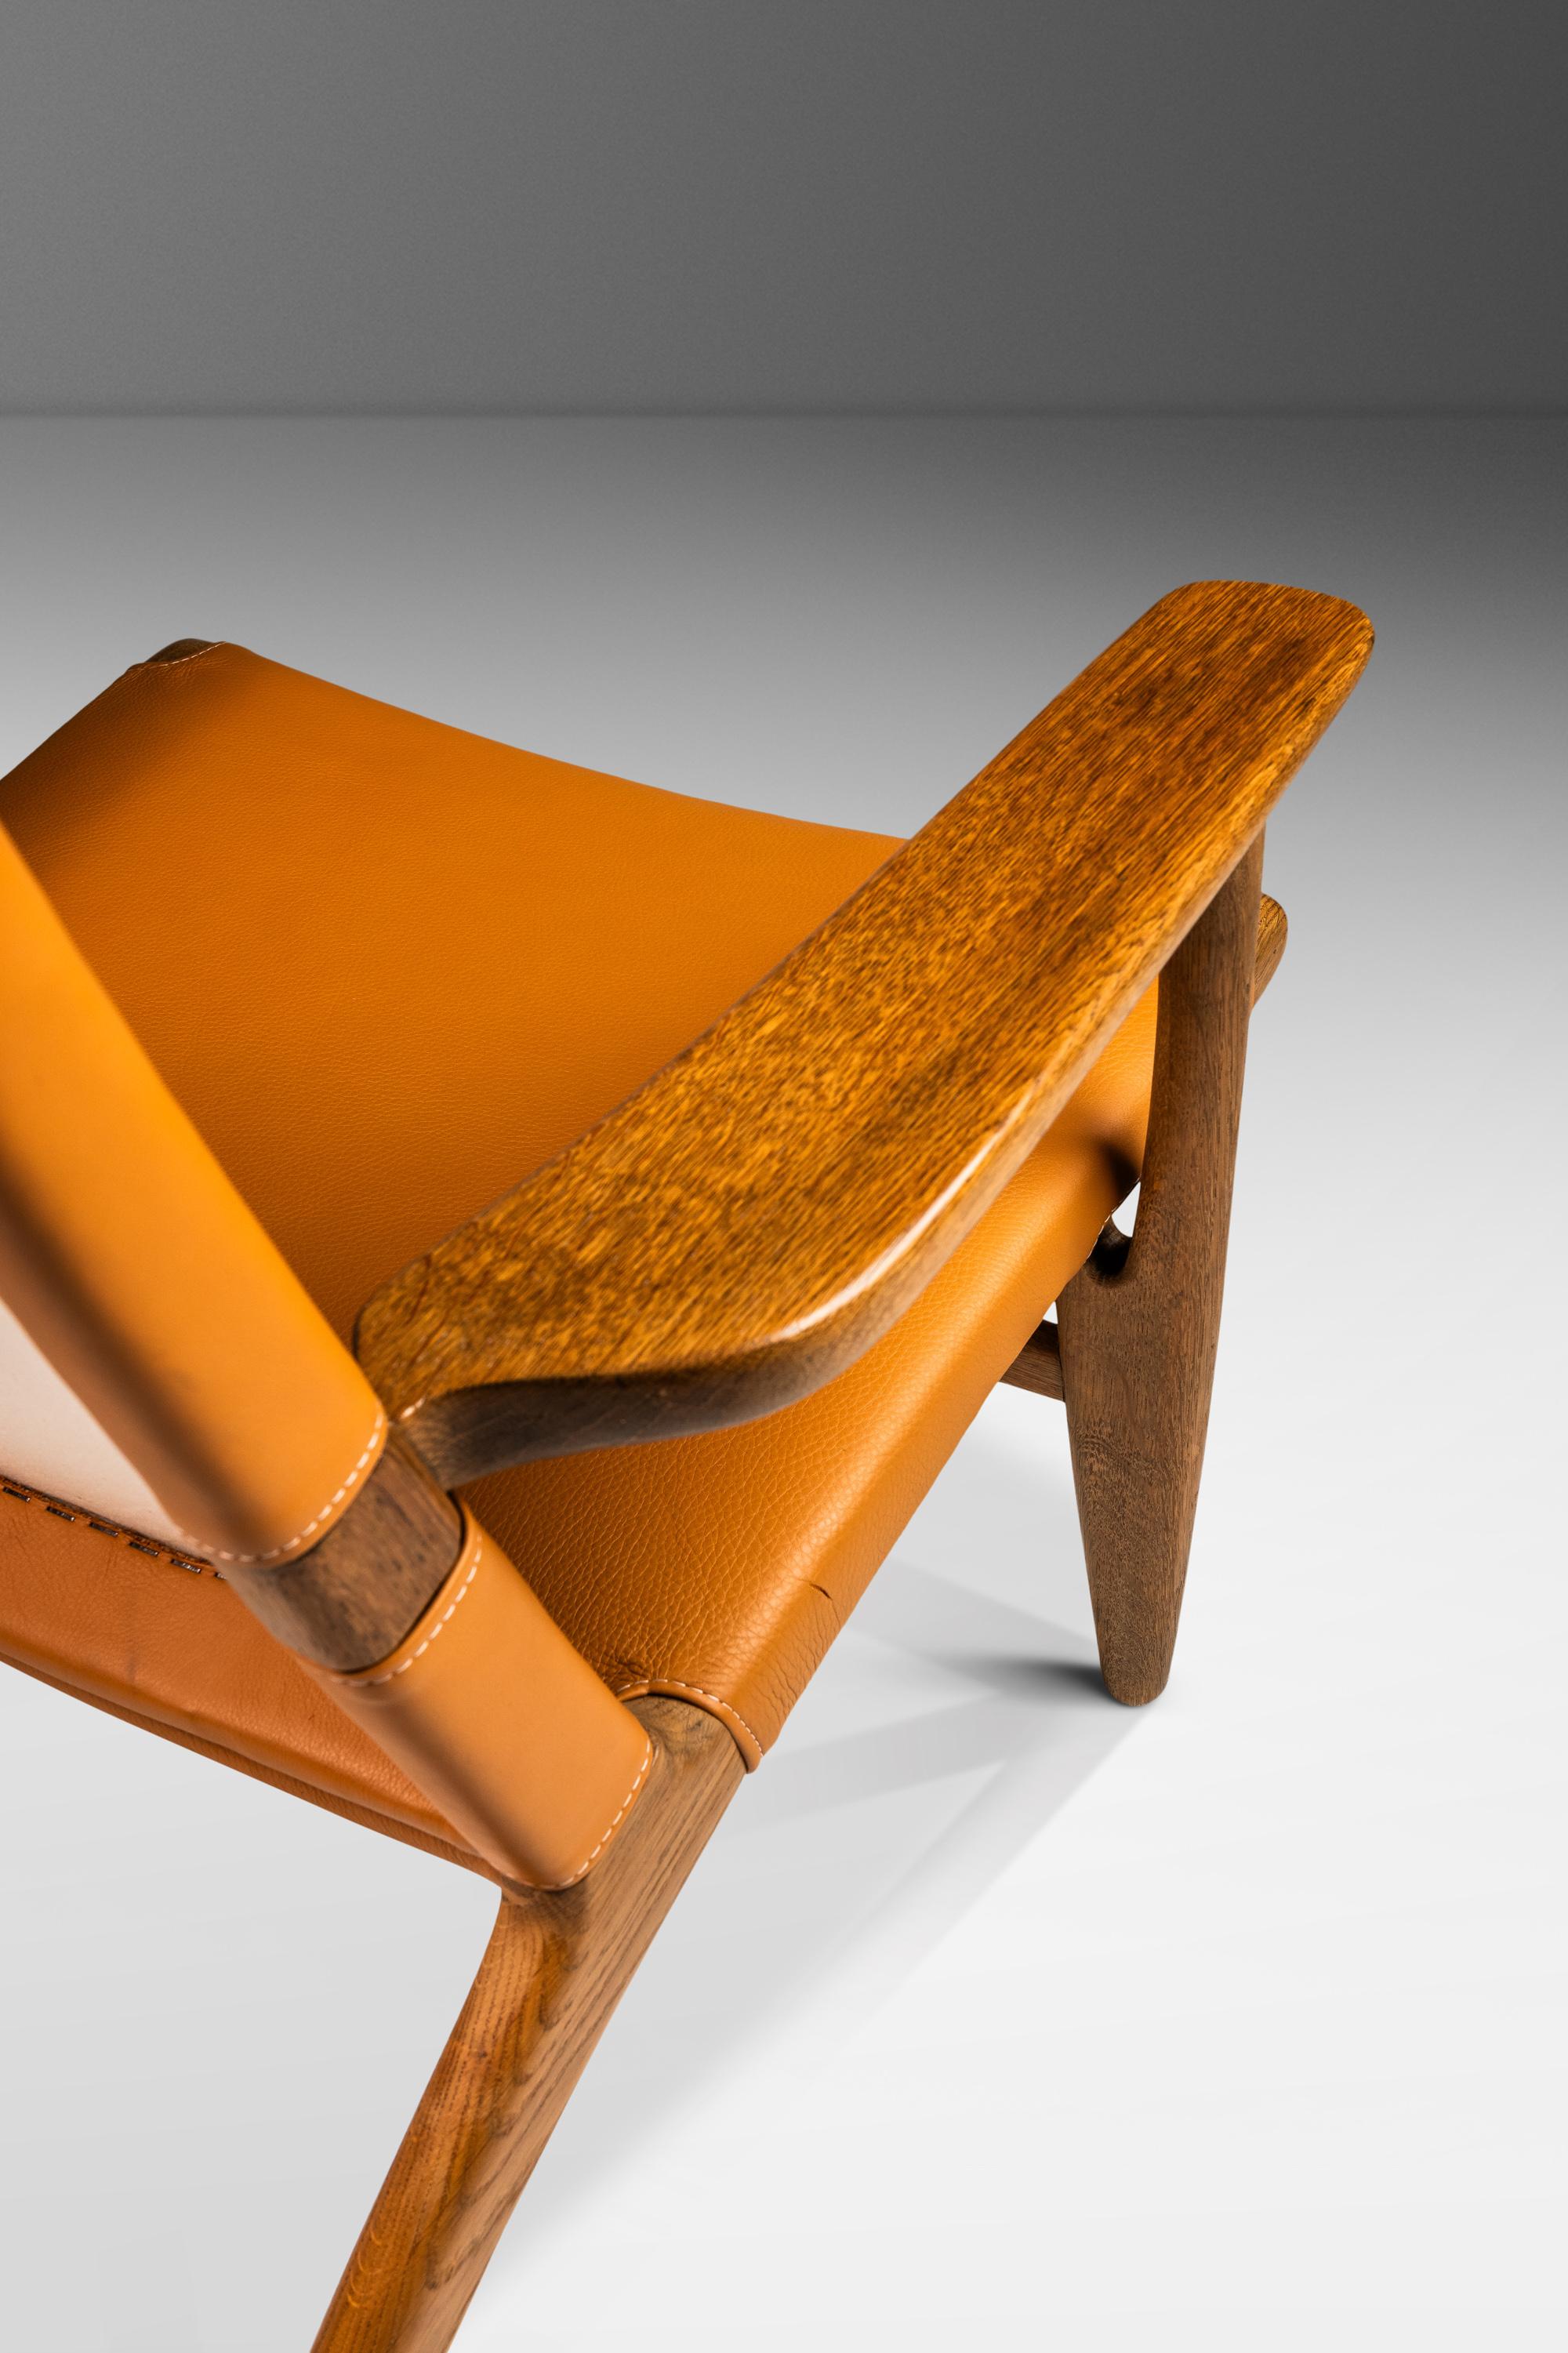  Danish Mid-Century CH 25 Lounge Chair by Hans J. Wegner, Oak & Leather, c. 1950 For Sale 4